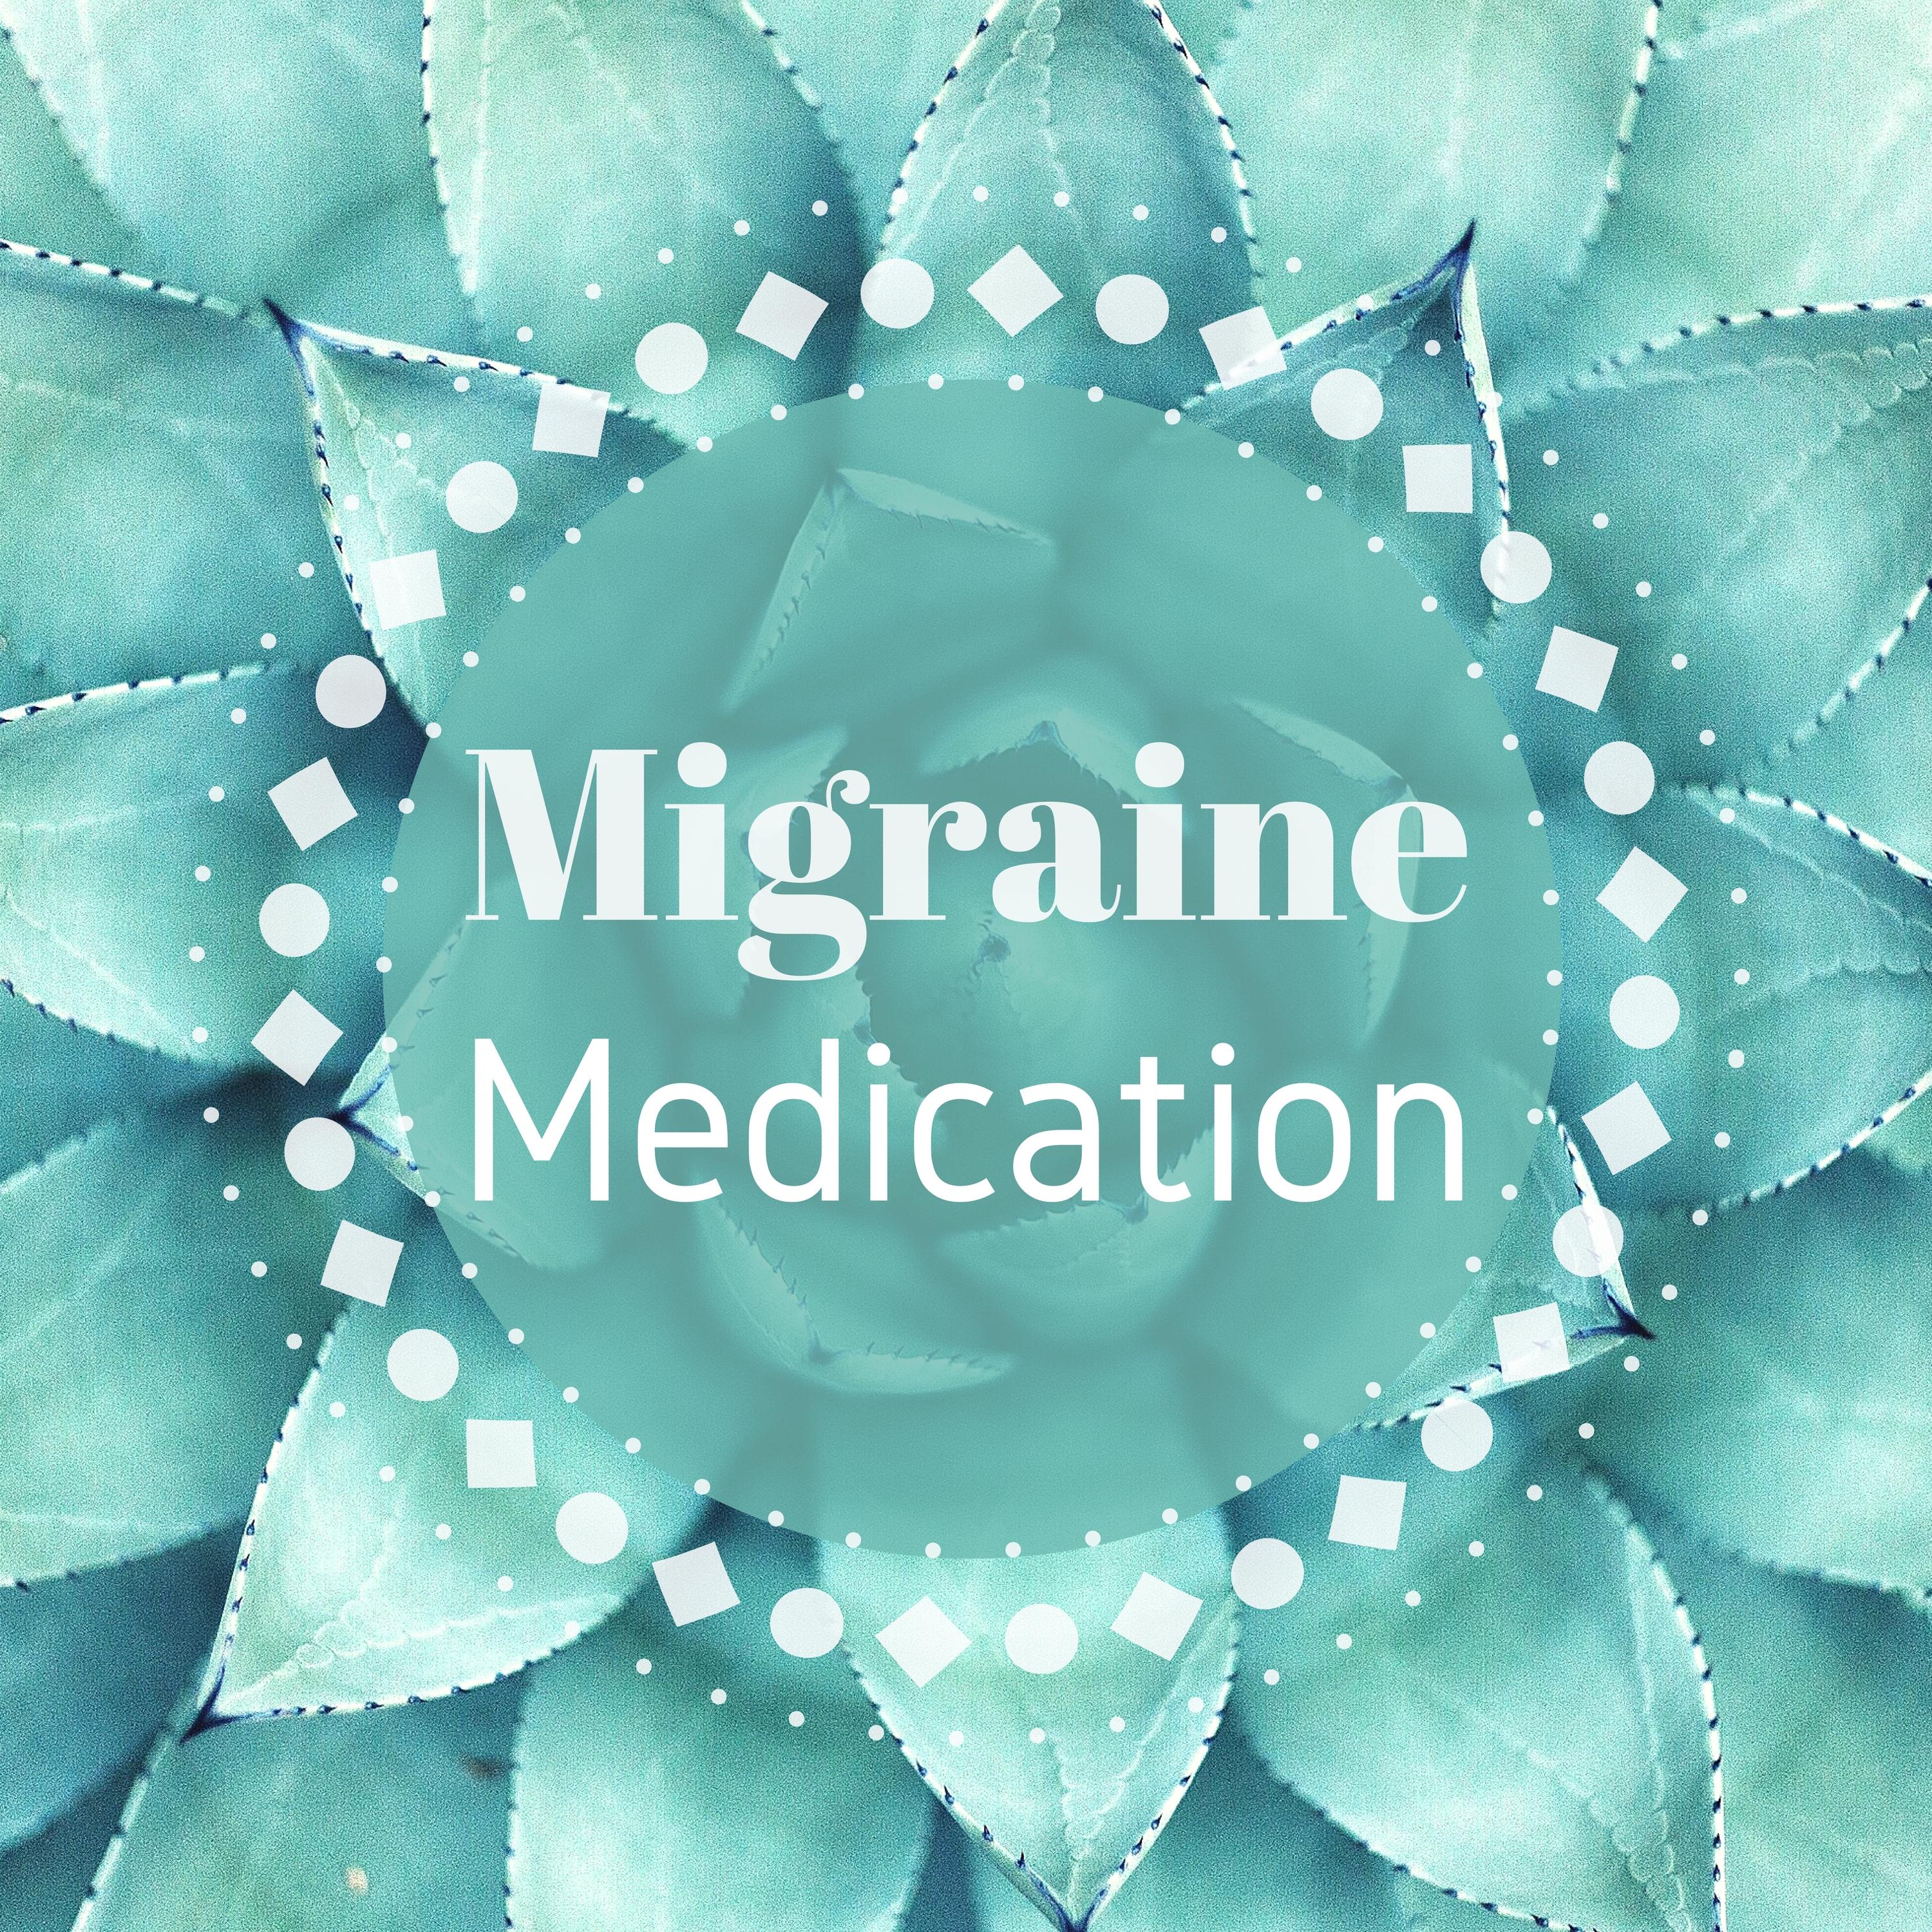 Migraine Medication - Relaxing Music to Ease the Worried Mind, Comfort Deep Sleep